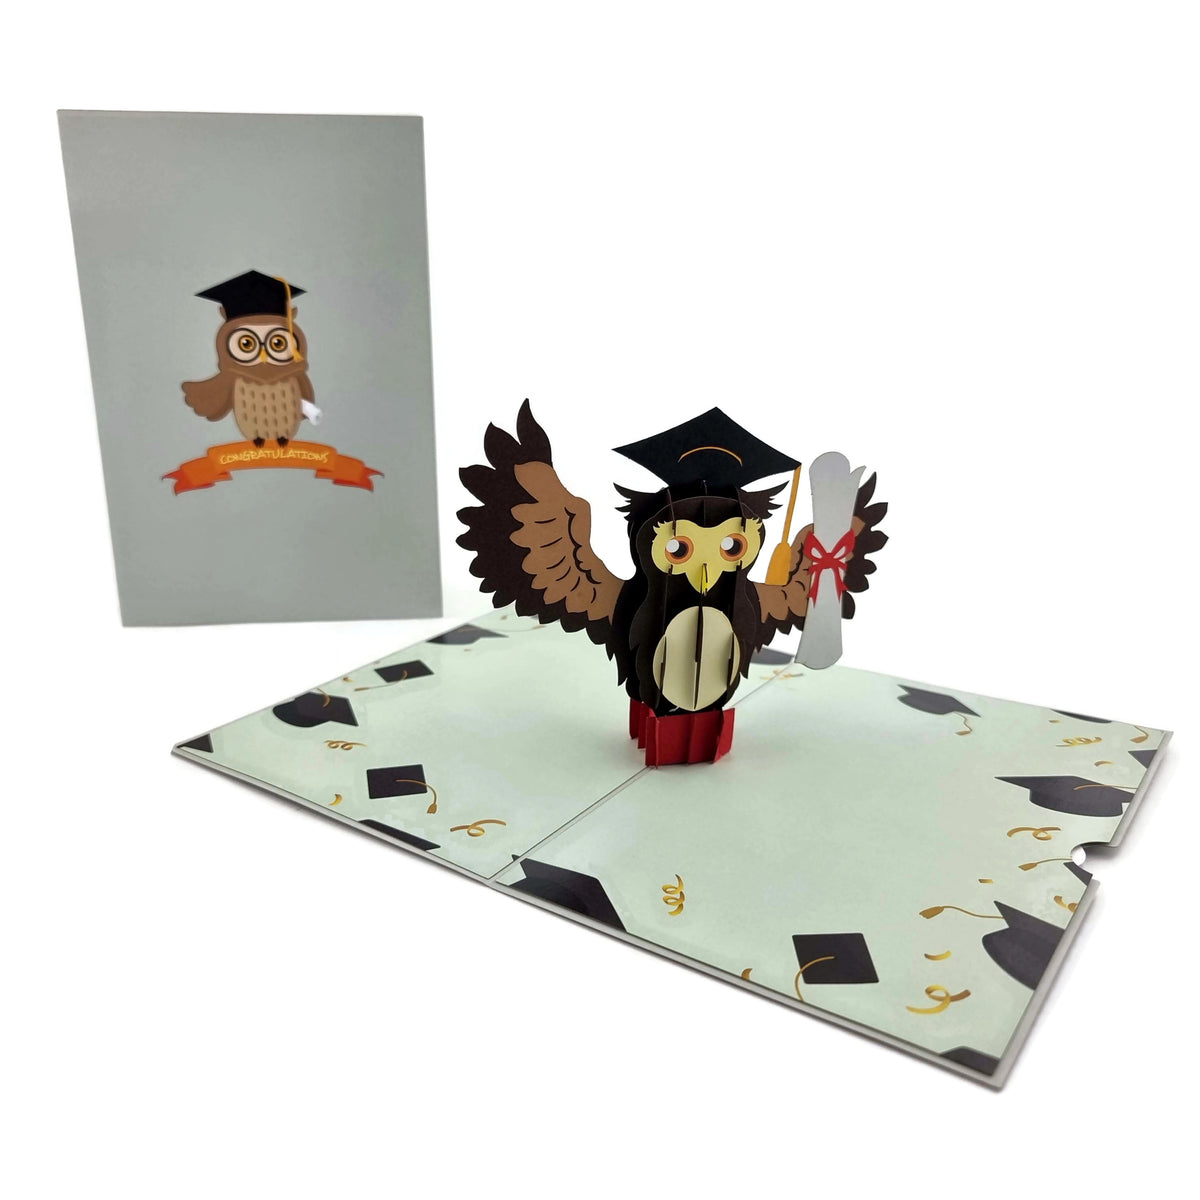 Graduation Owl Pop-Up Card